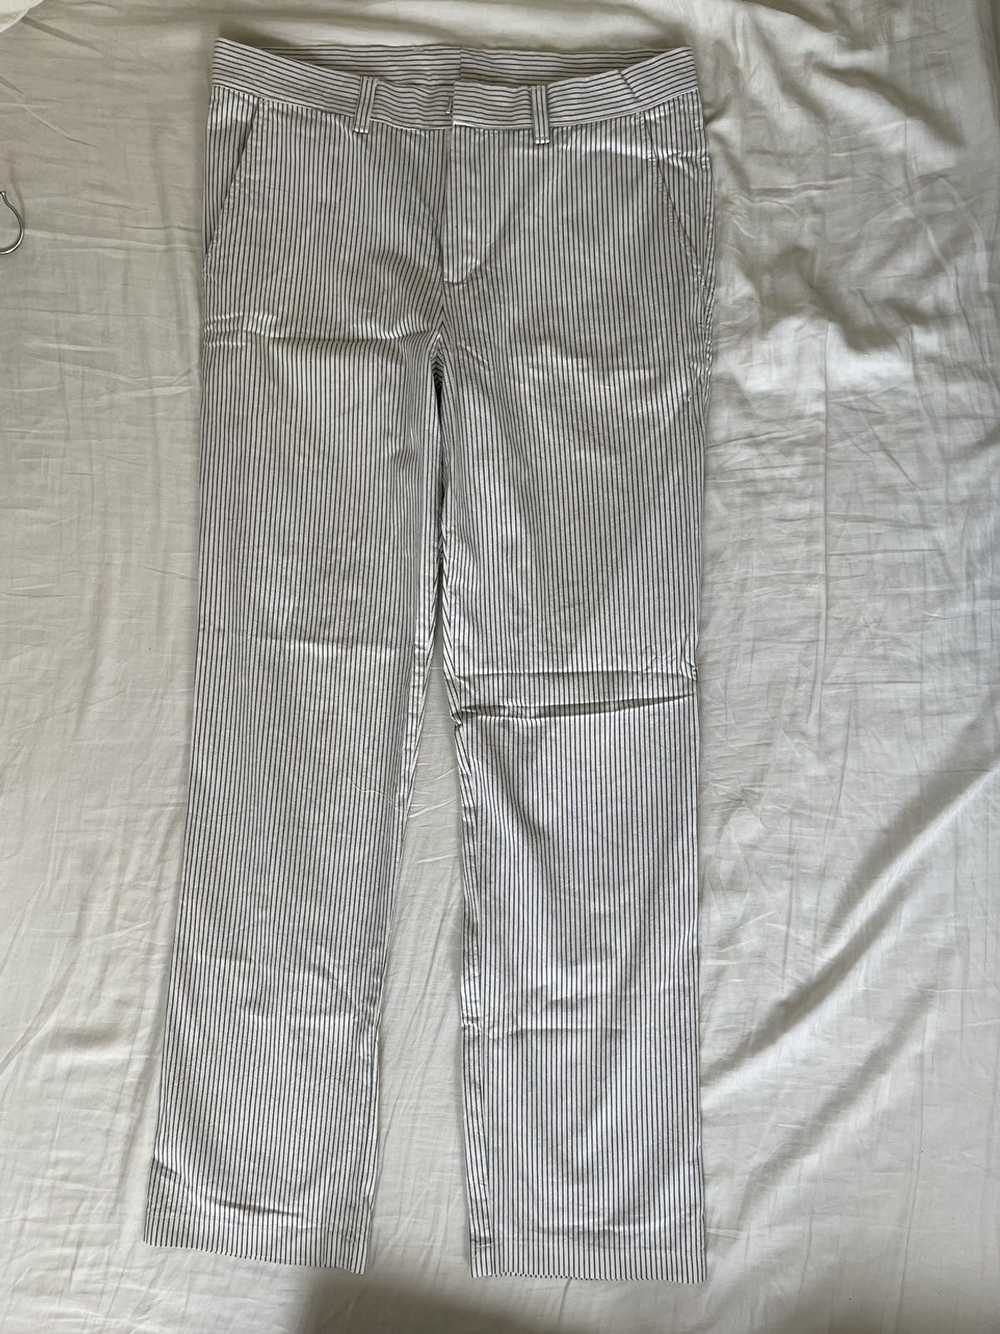 American Apparel Striped Pants - image 3